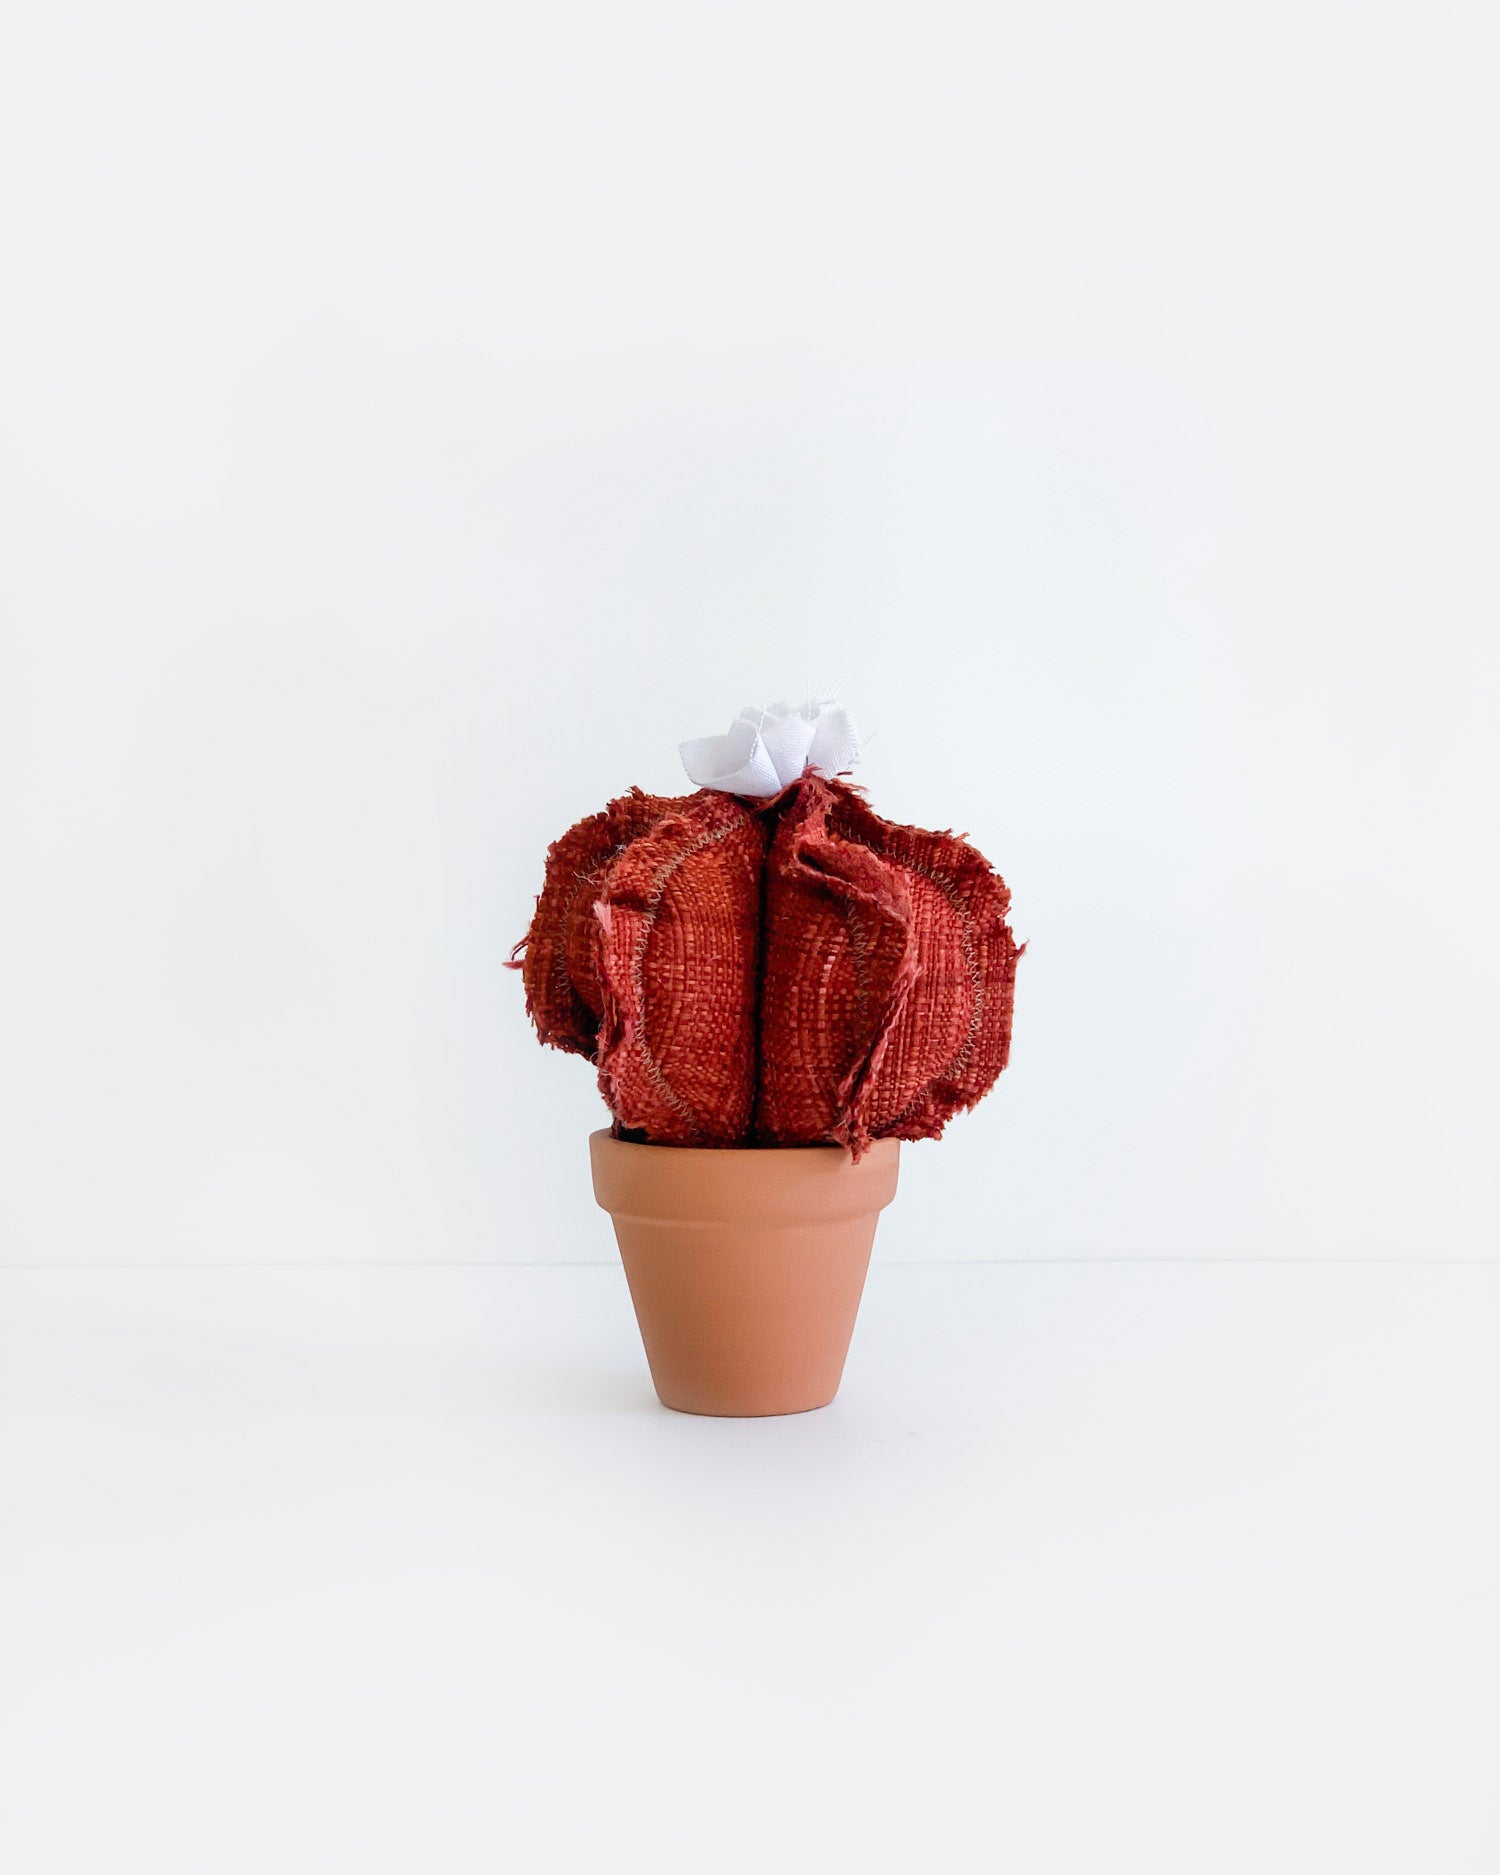 Mini Barrel Cactus - Vintage Red (Sample)